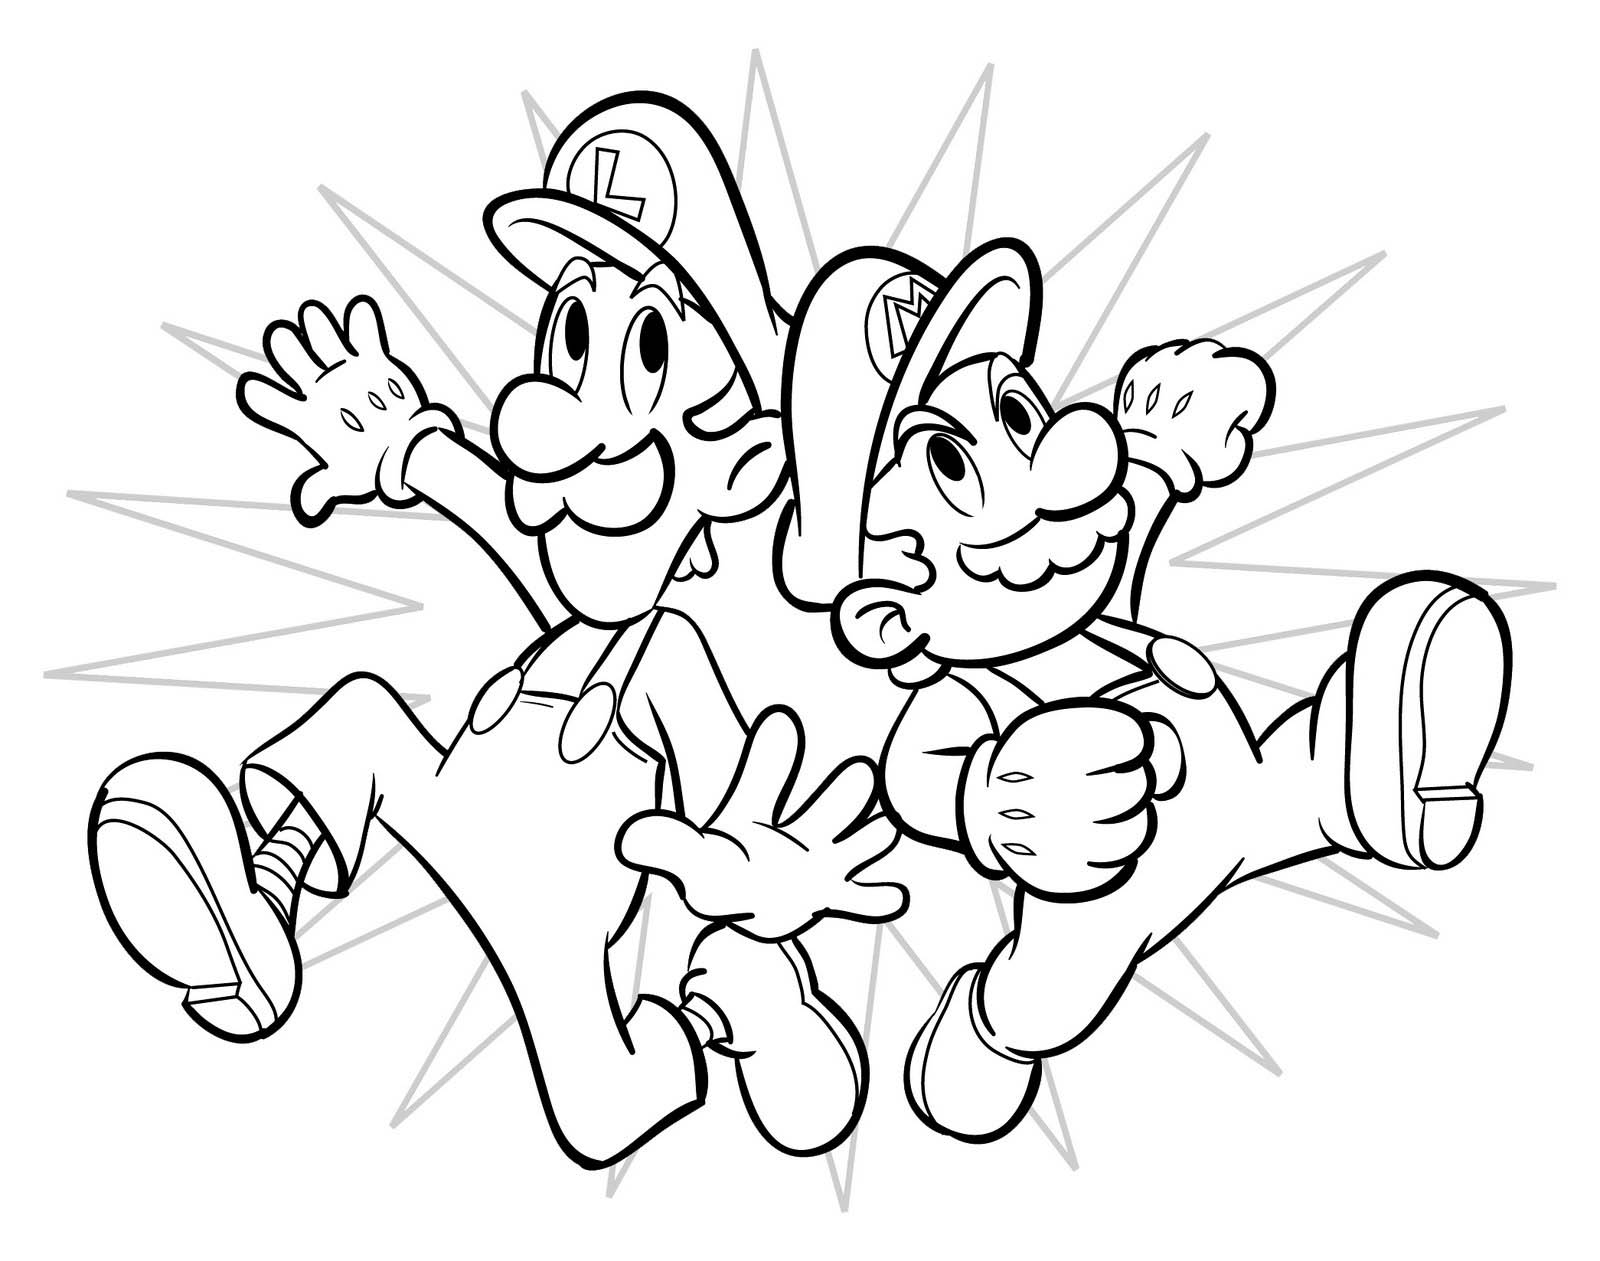 Coloring page: Super Mario Bros (Video Games) #153607 - Printable coloring pages